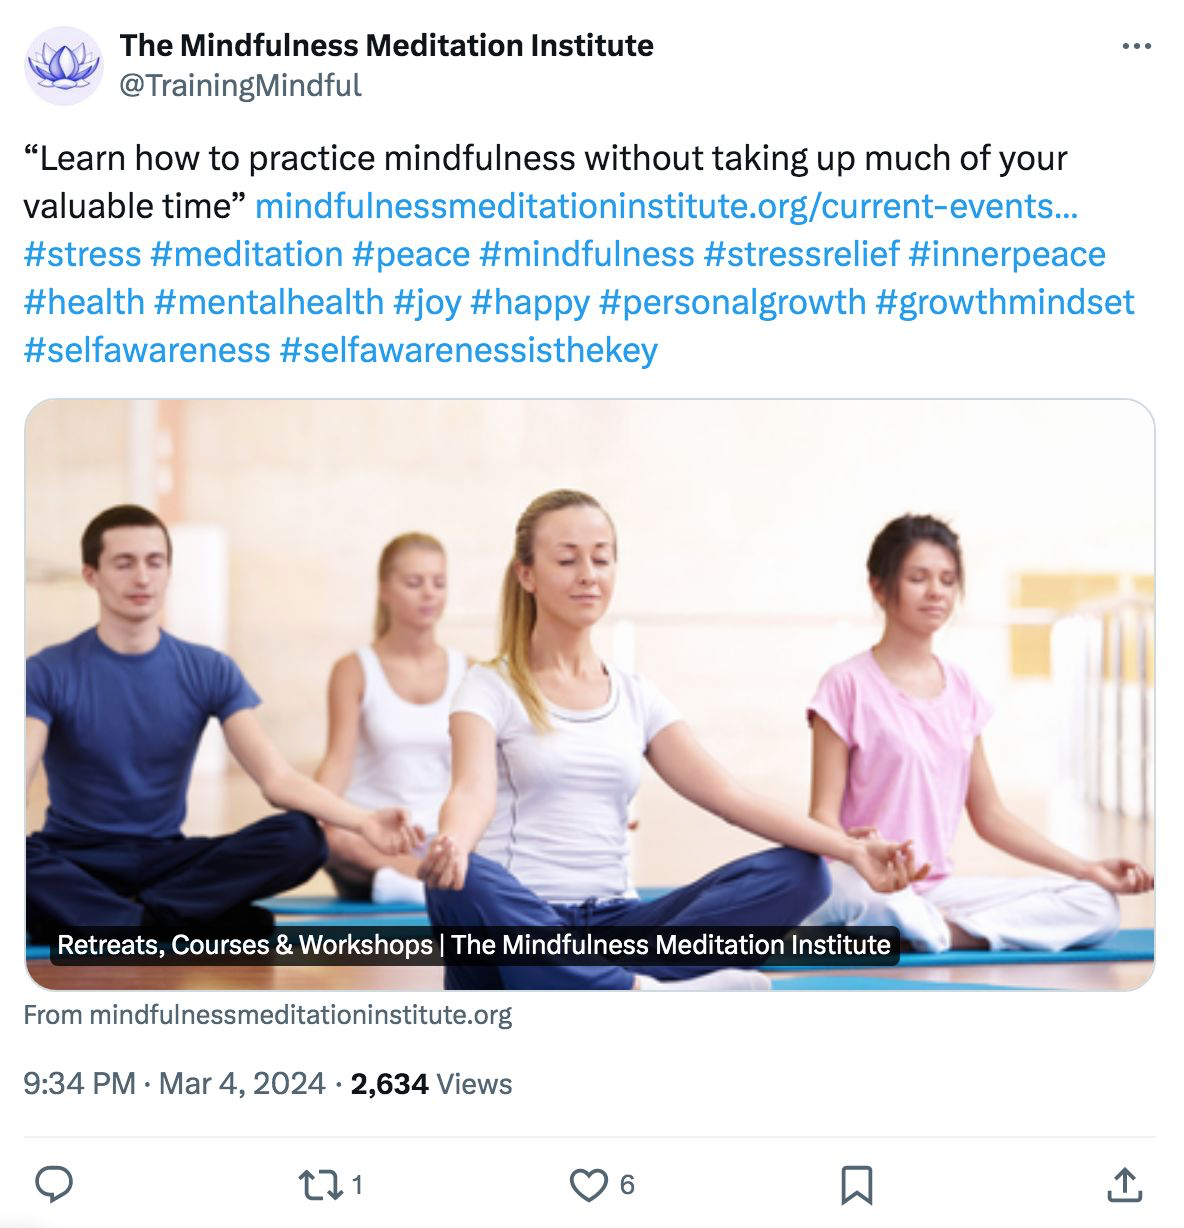 The Mindfulness Meditation Institute's blog post ad